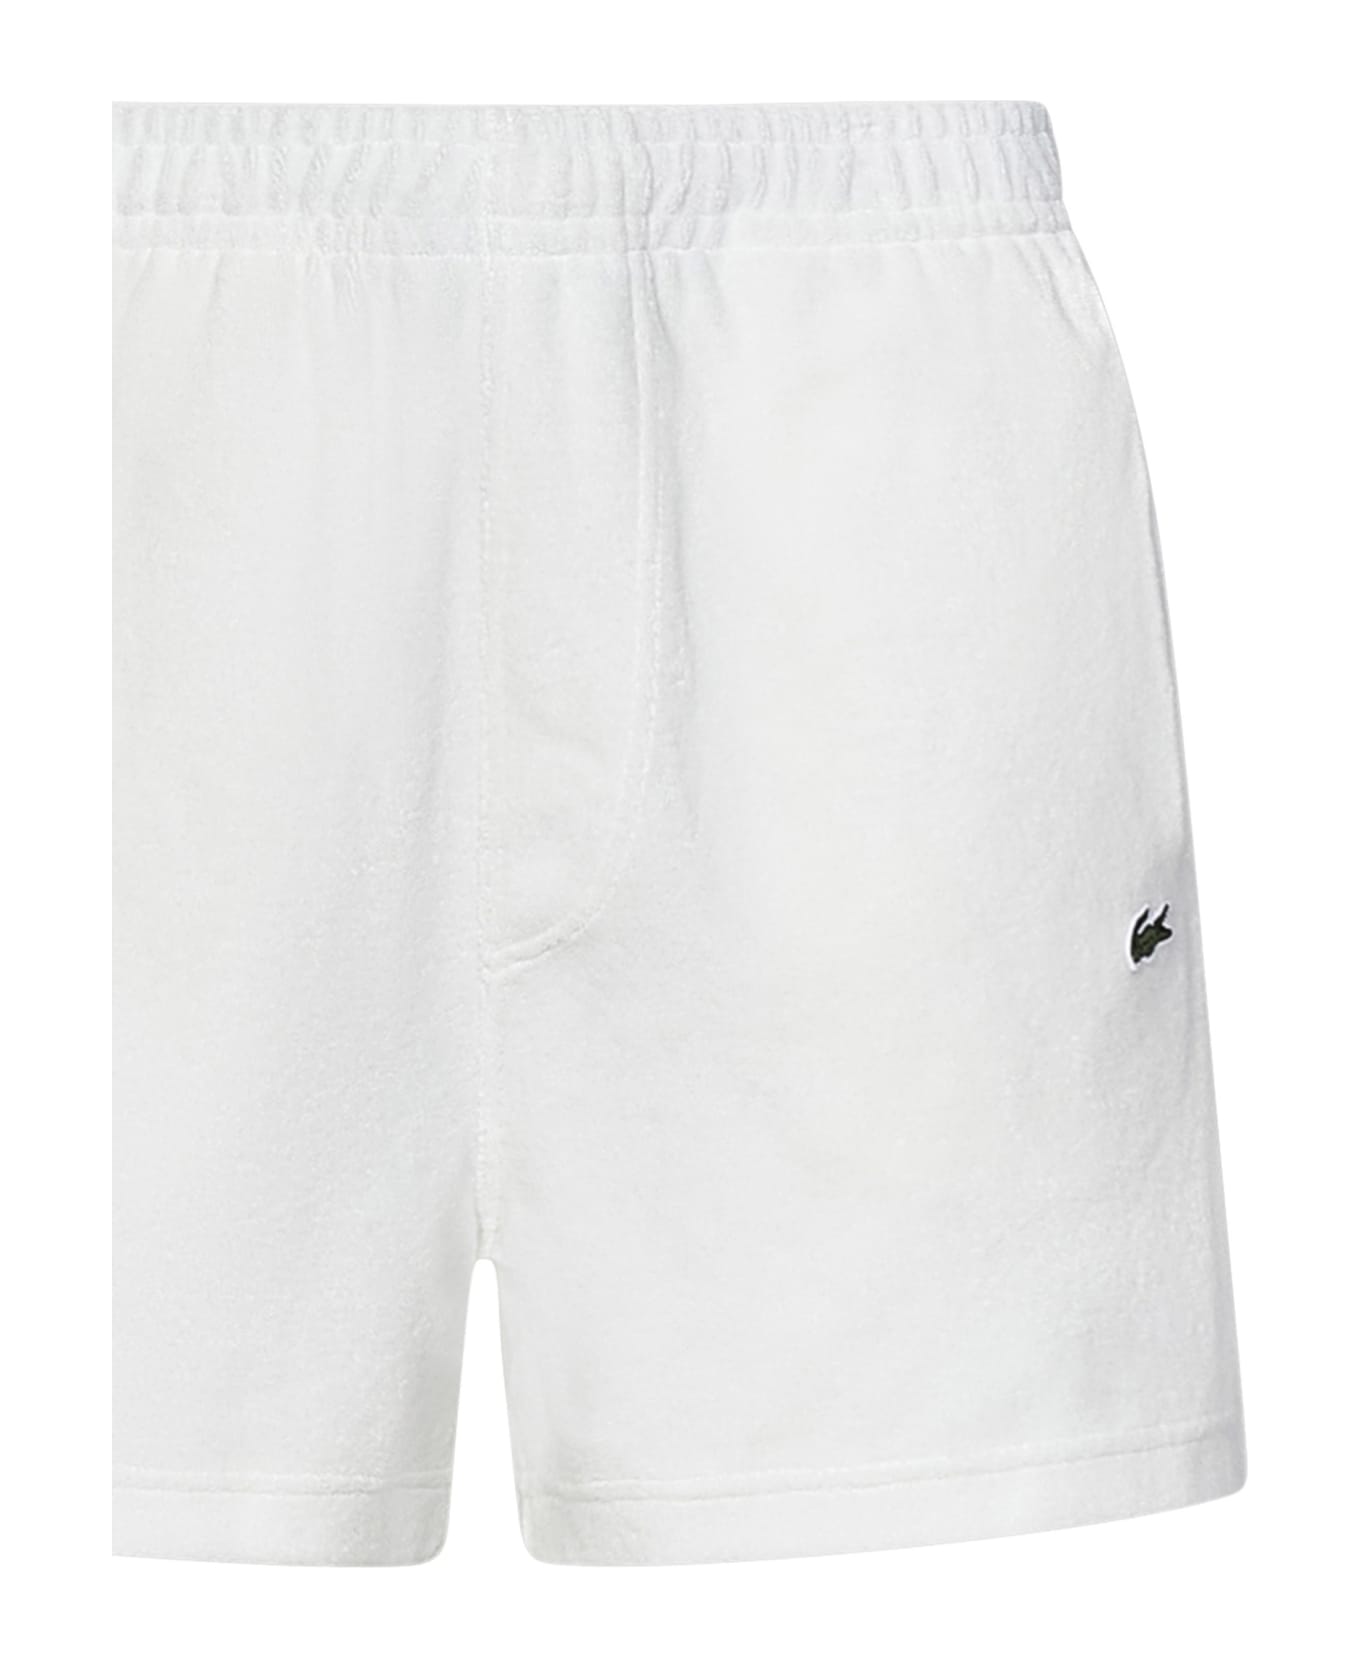 Lacoste Paris Shorts - White ショートパンツ